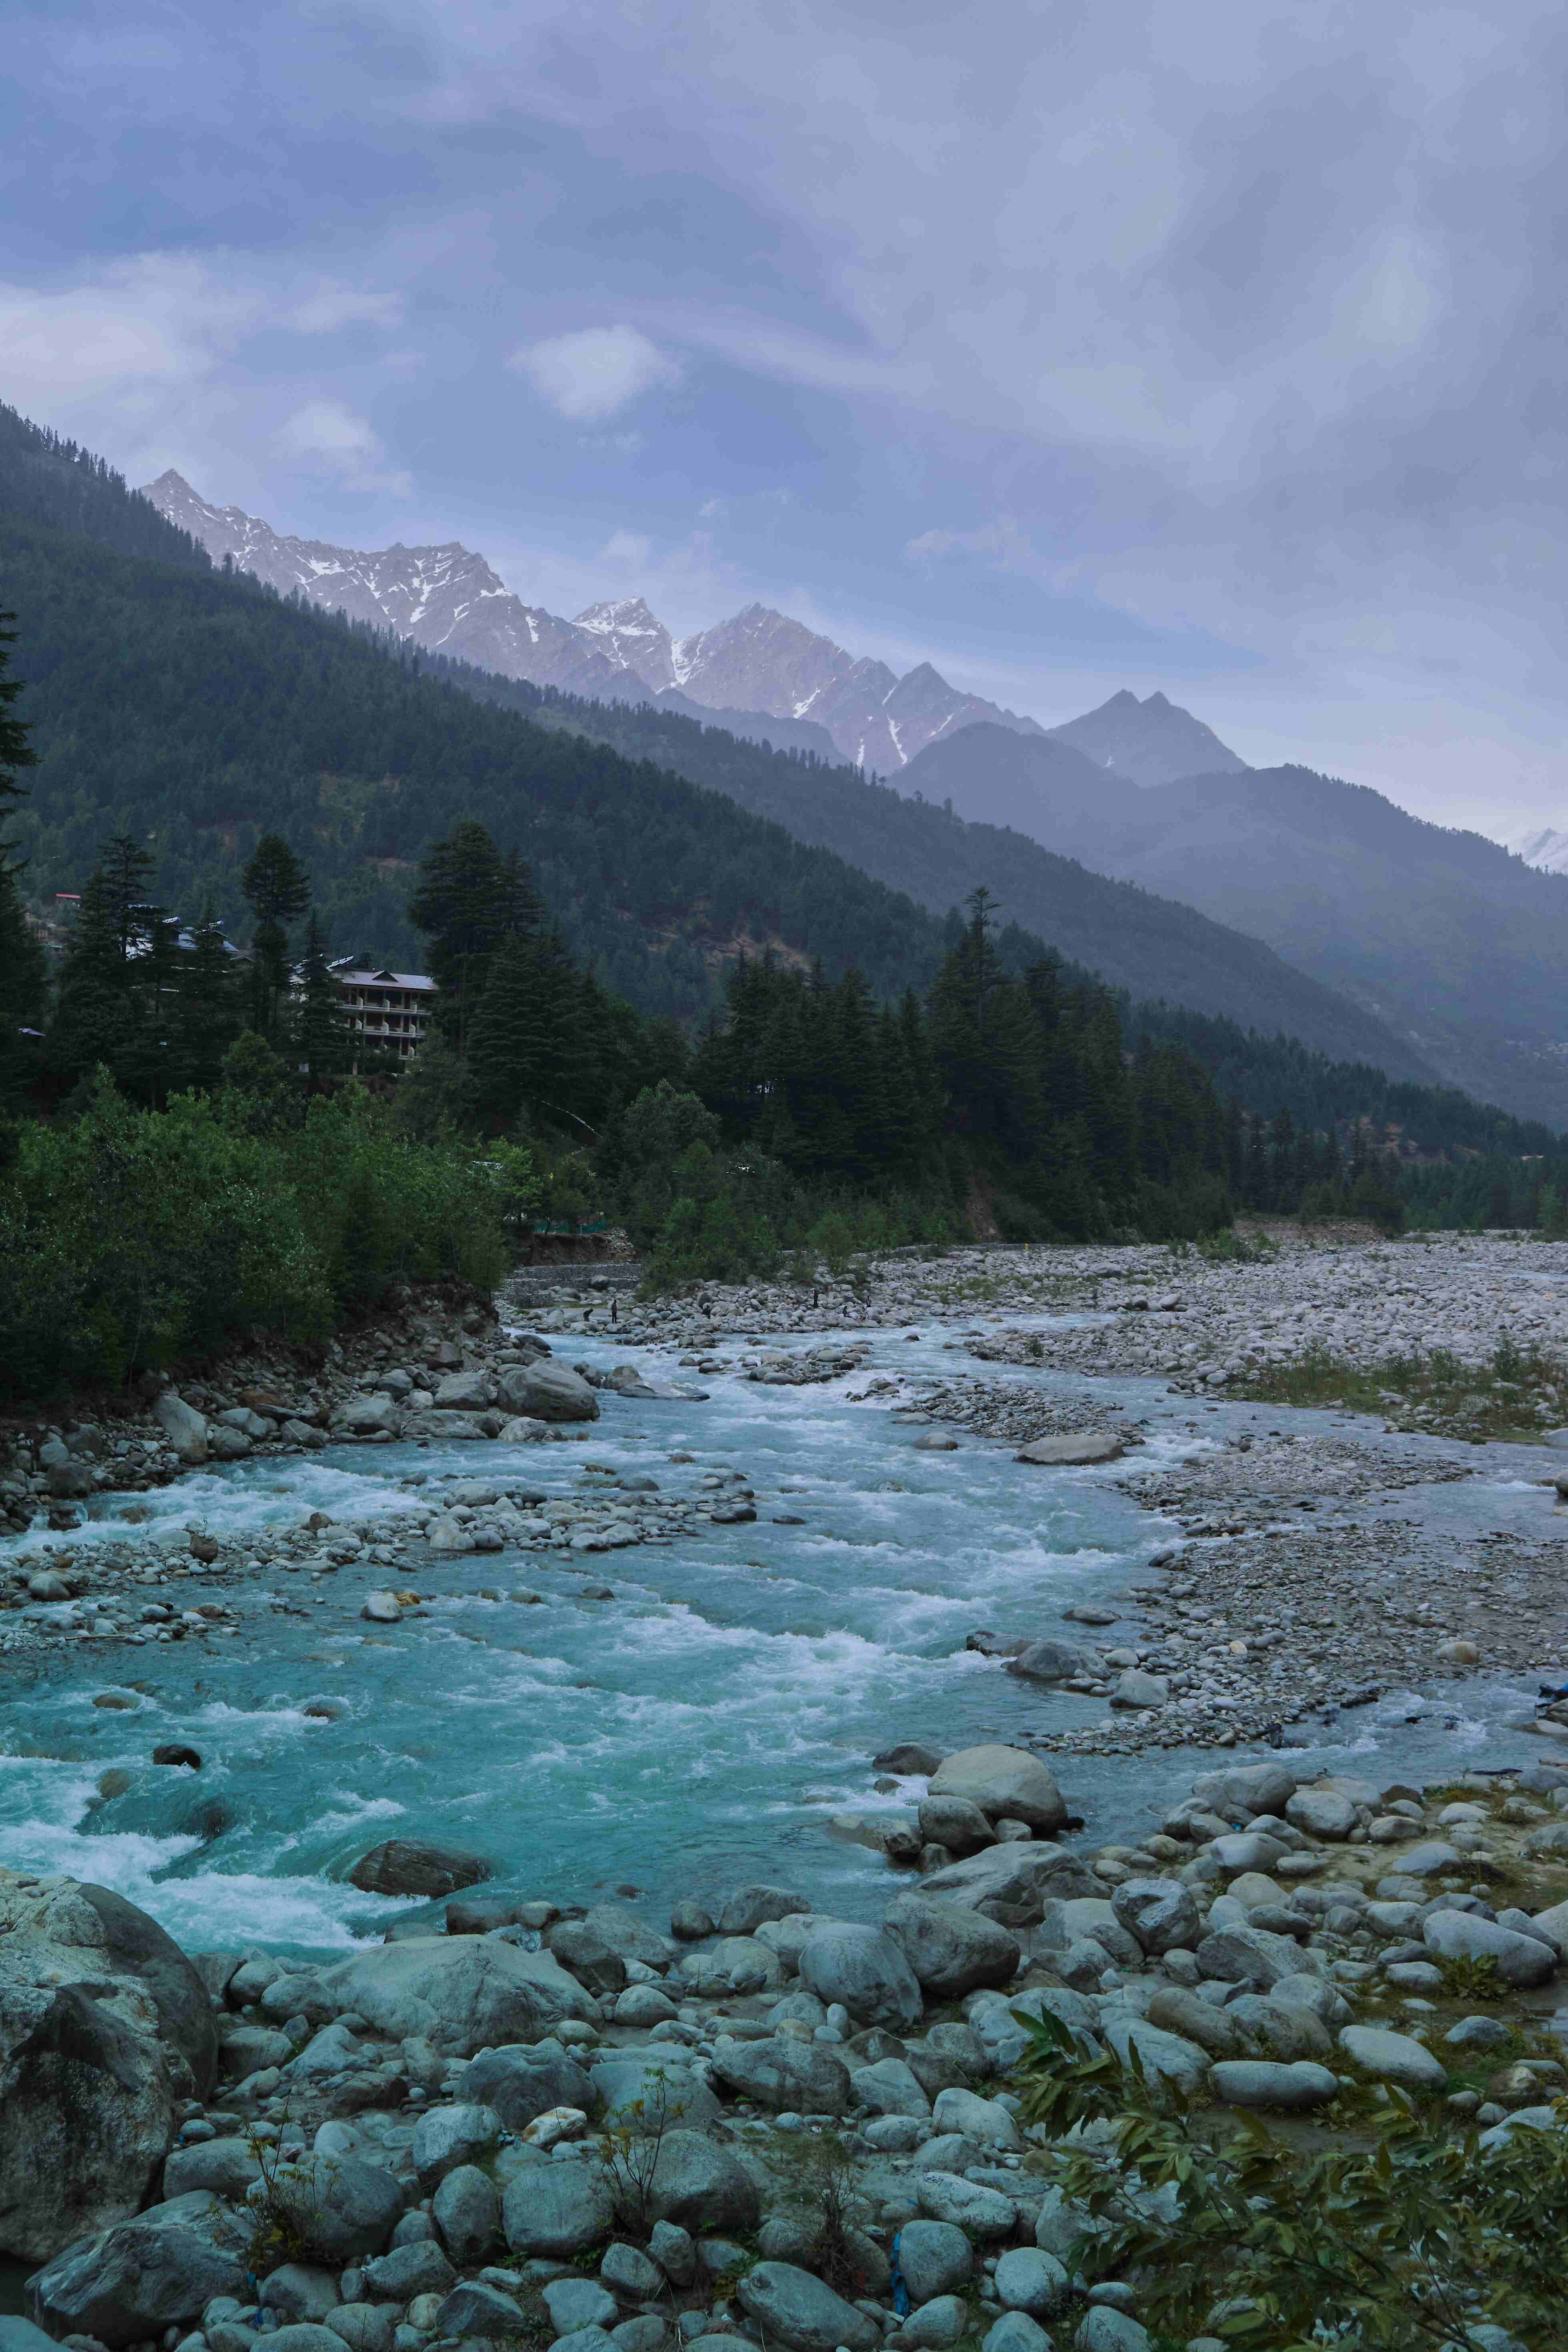 Thrilling Adventure Awaits: Manali with Hampta Pass - Conquer the Himalayan Heights